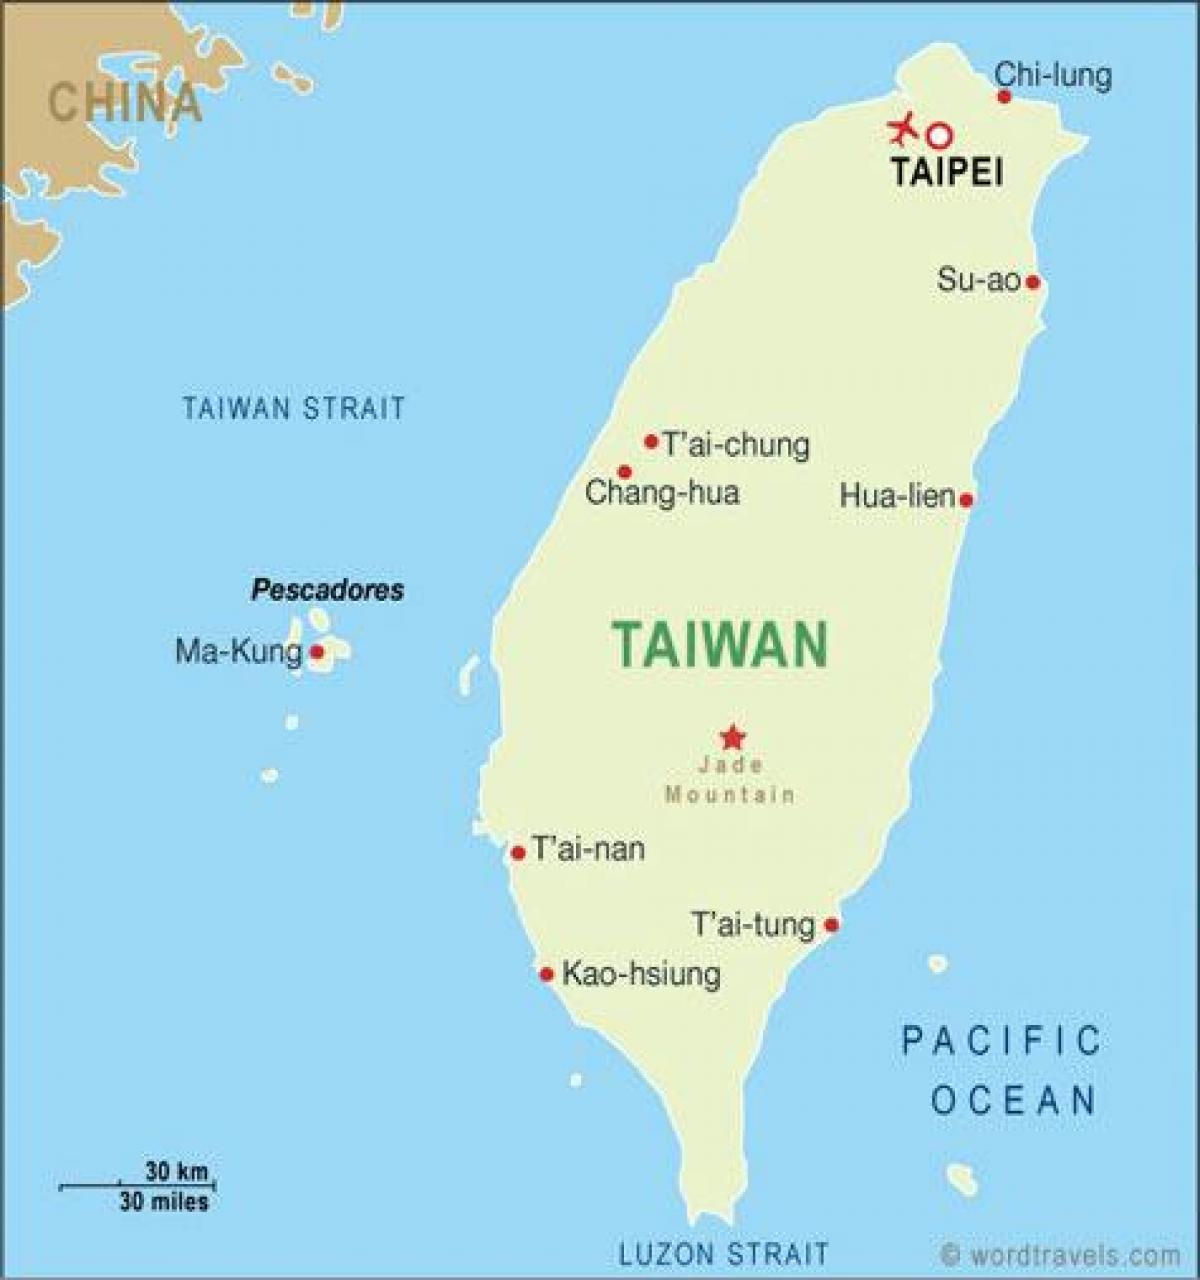 Taiwan taoyuan international airport 지도